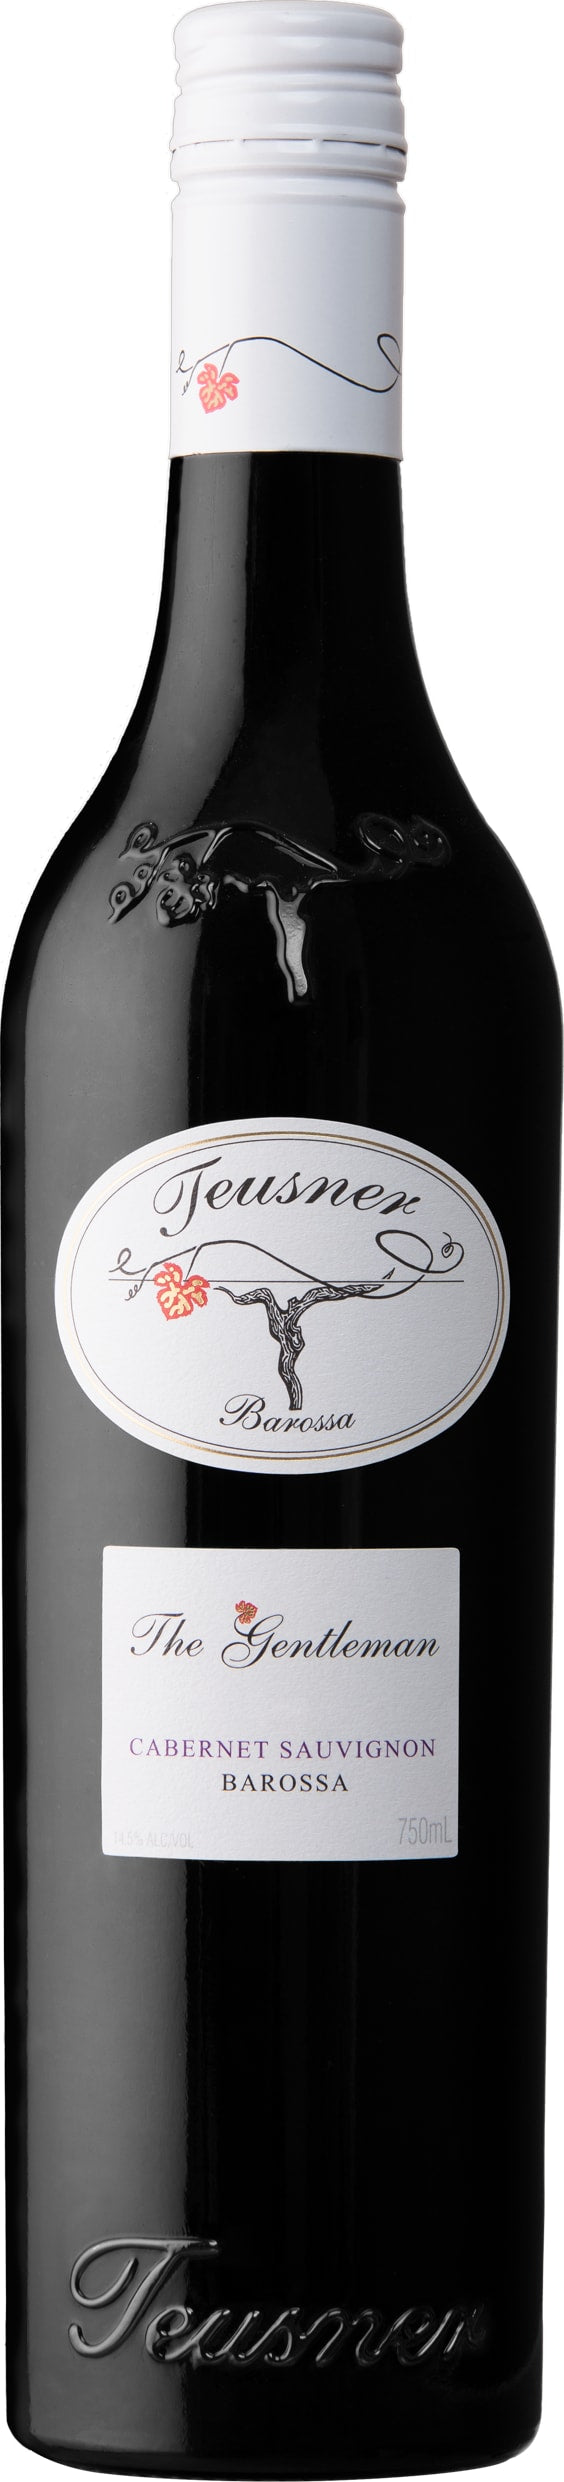 Teusner Wines The Gentleman Cabernet Sauvignon 2021 75cl - Buy Teusner Wines Wines from GREAT WINES DIRECT wine shop